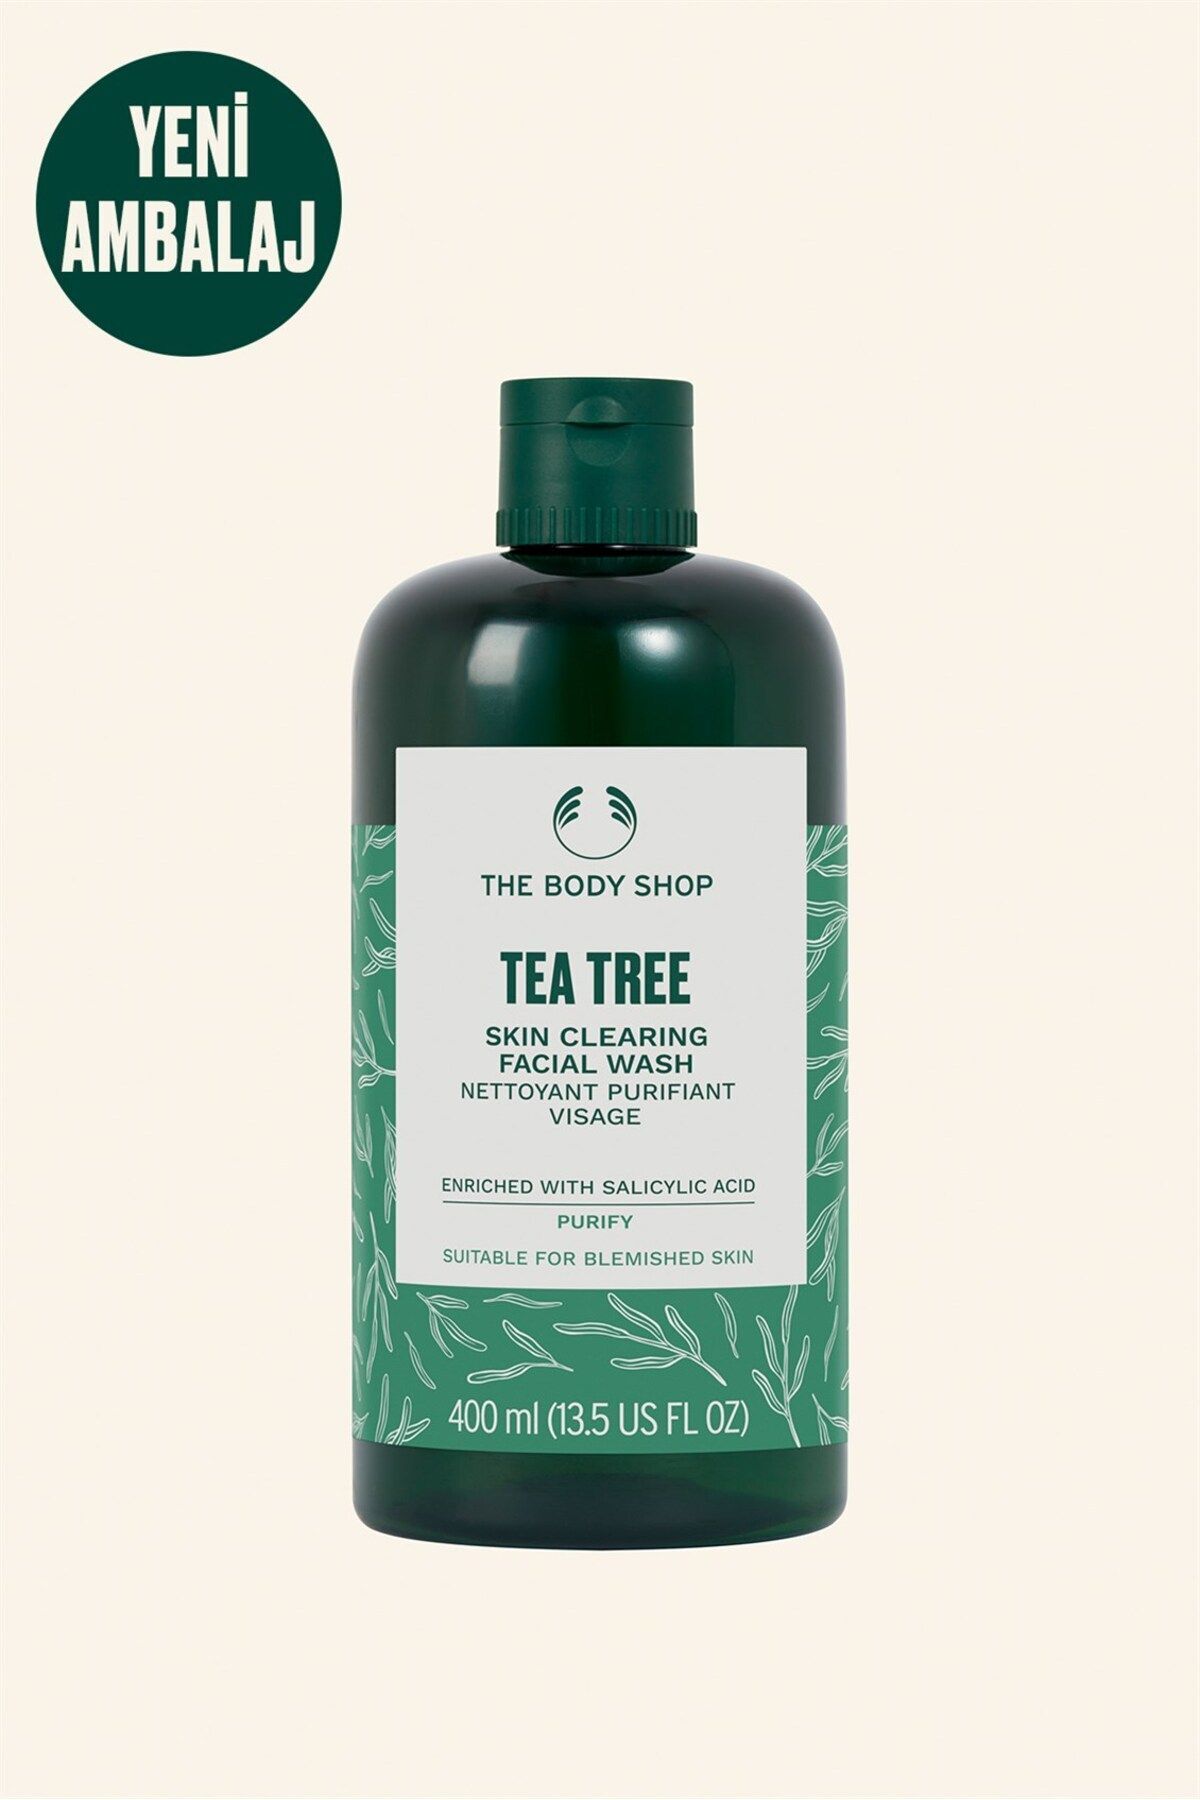 THE BODY SHOP Çay Ağacı Tea Tree Yüz Yıkama Jeli 400 ml